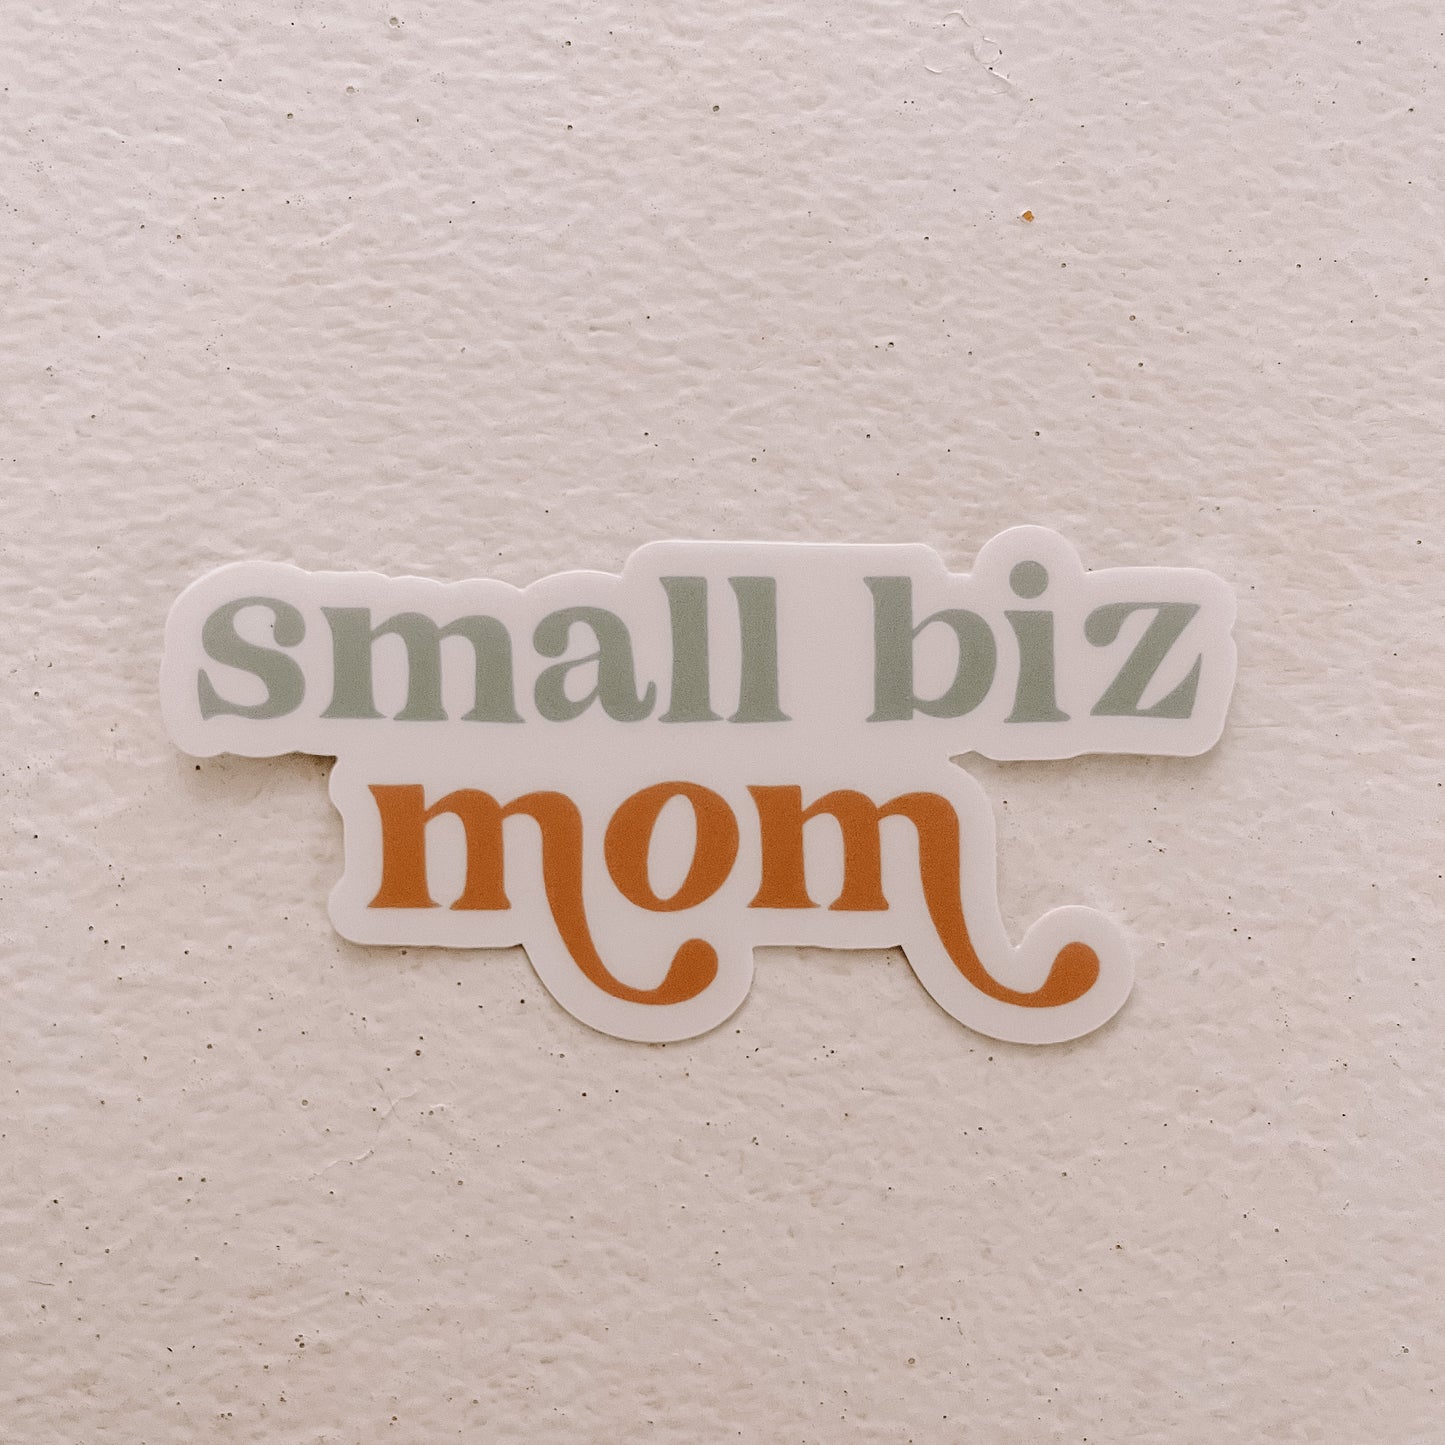 Small Biz Mom Sticker